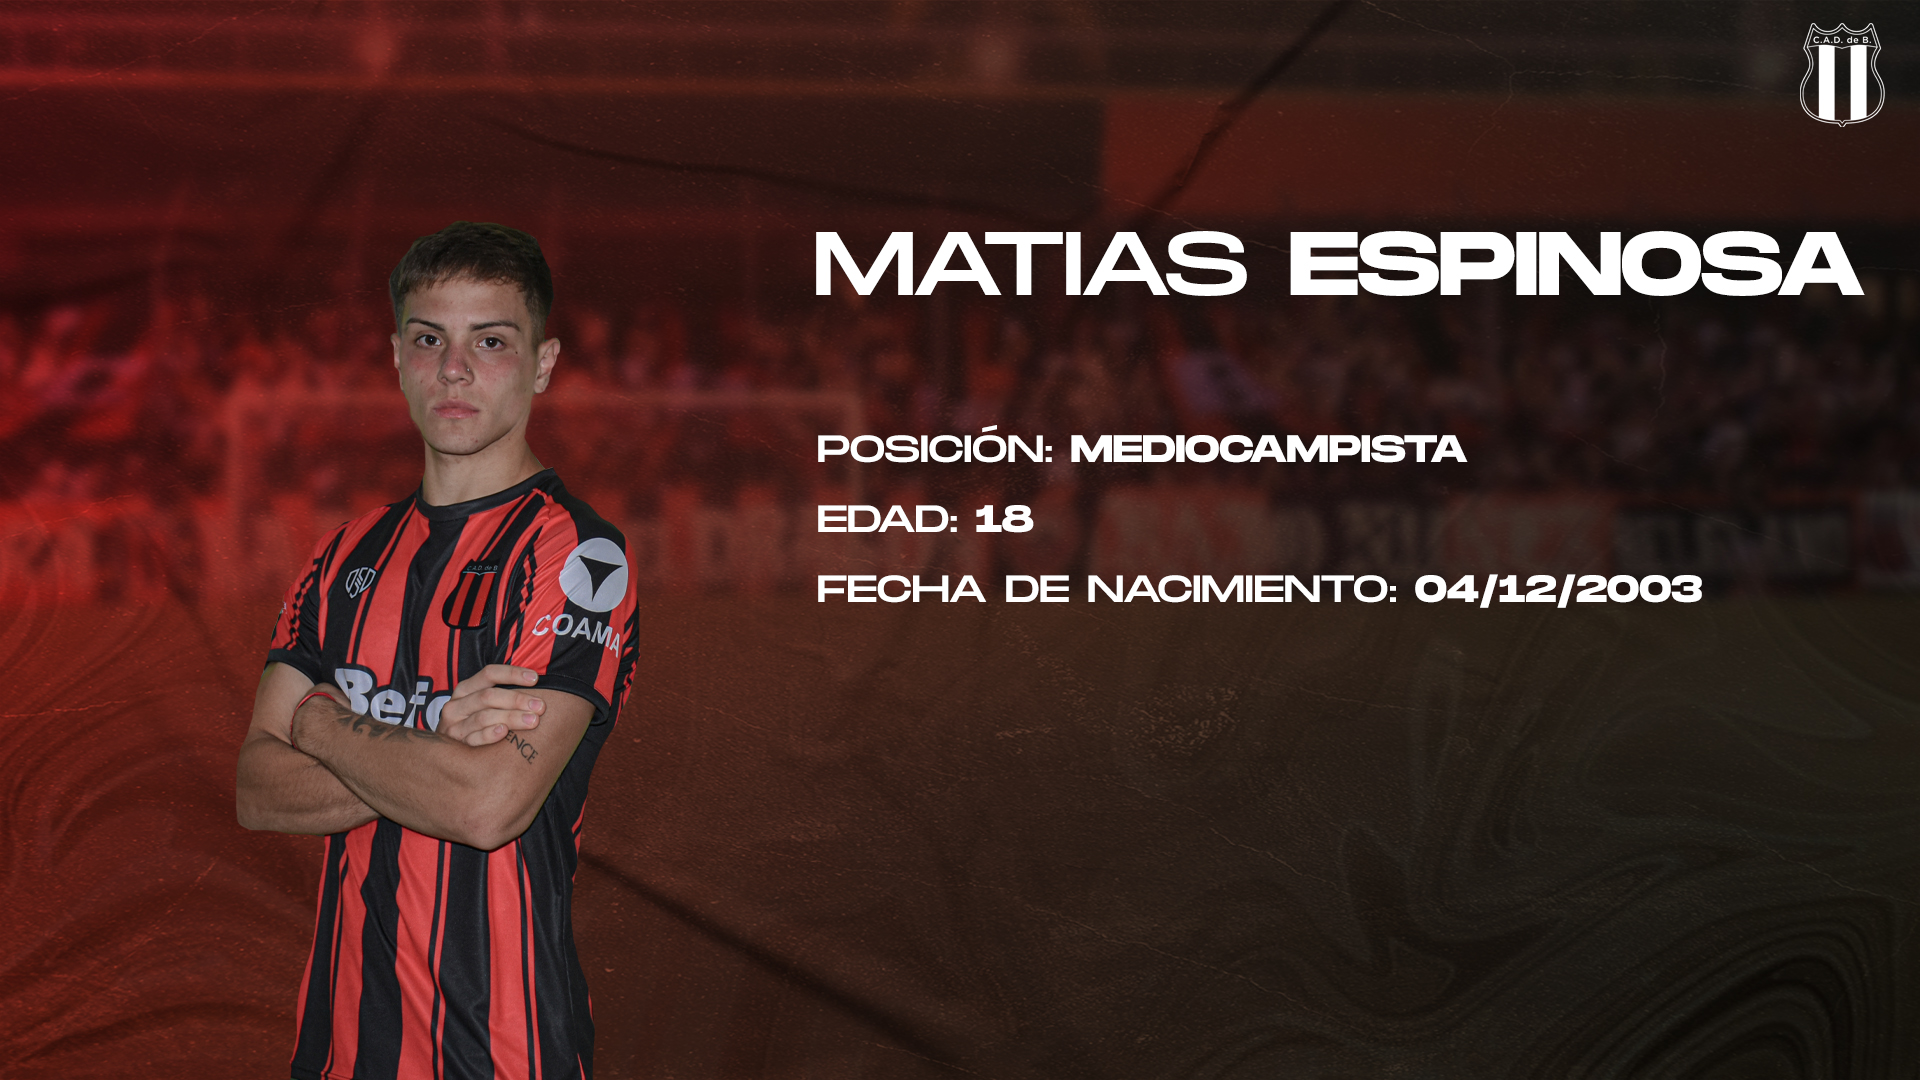 Matias Espinosa